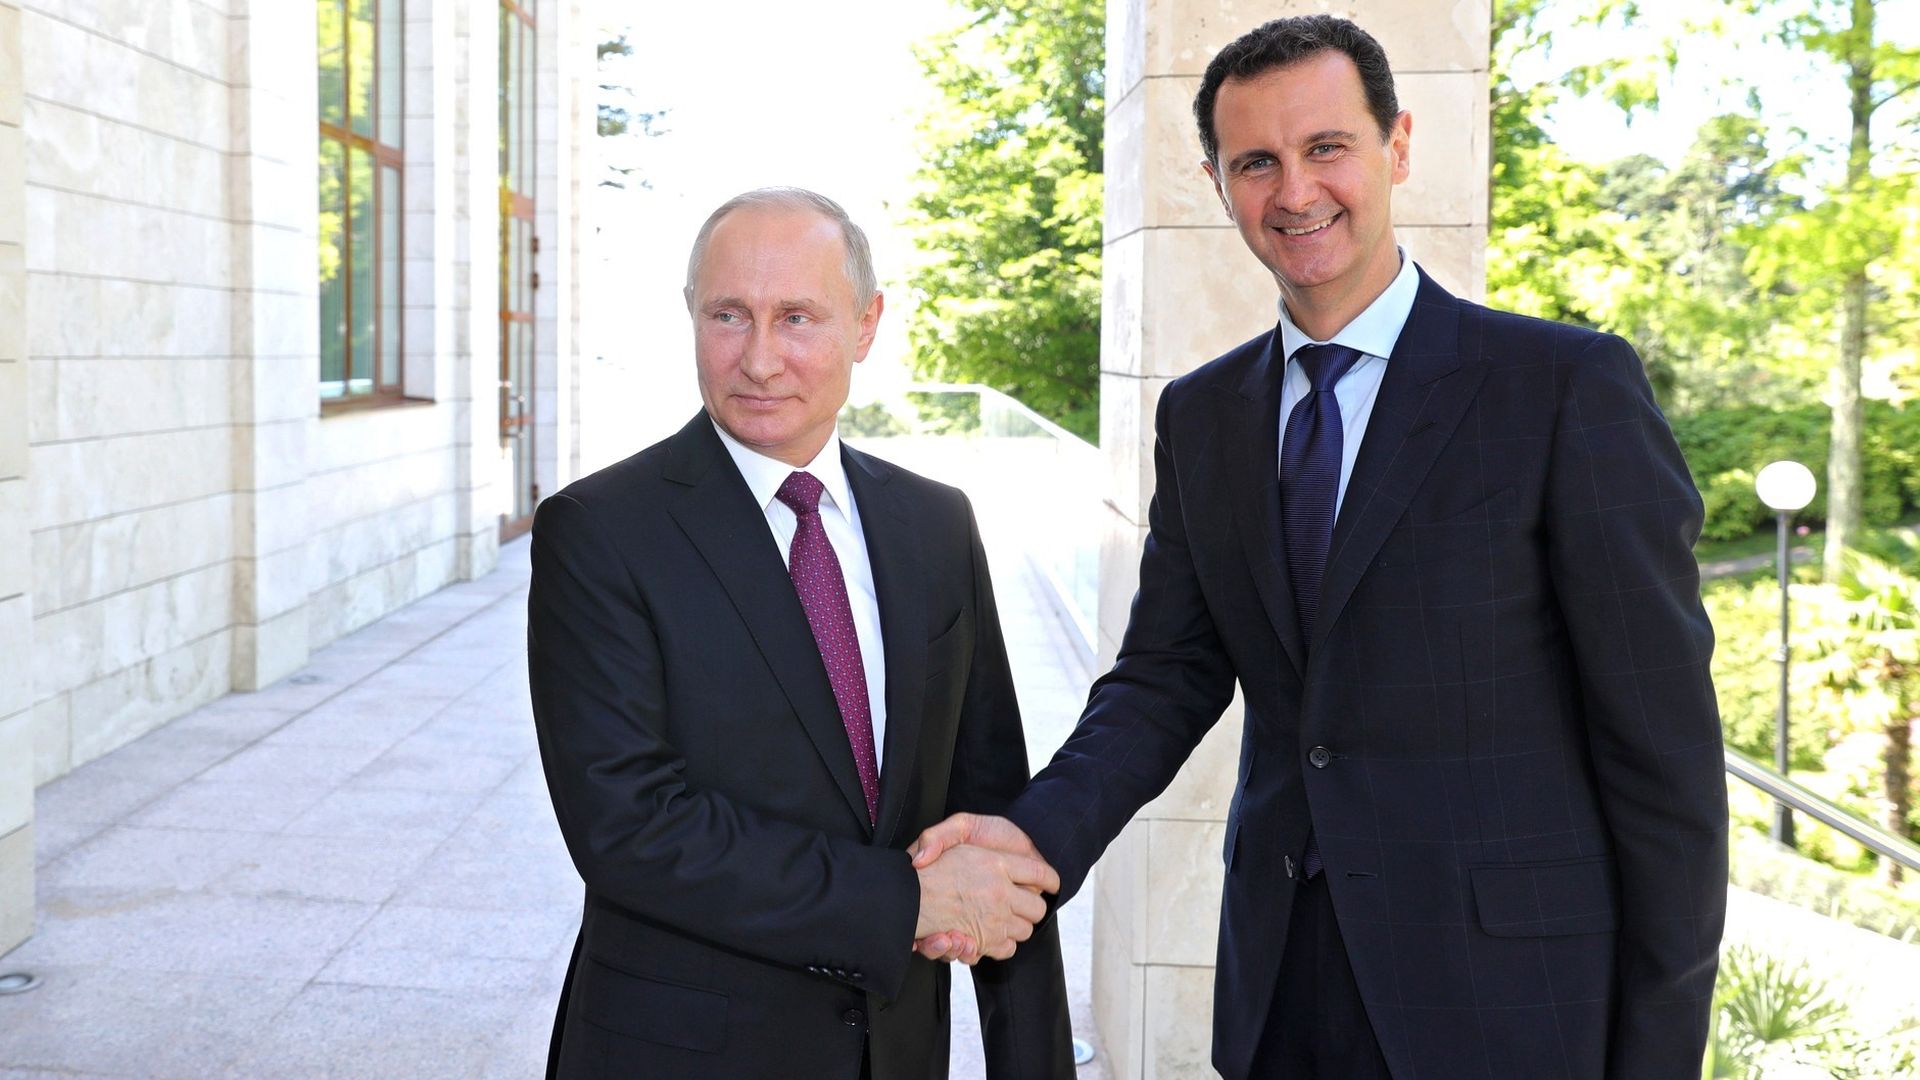 Russian President Vladimir Putin shaking hands with President of Syria Bashar Al-Assad in Sochi, Russia on May 17, 2018.